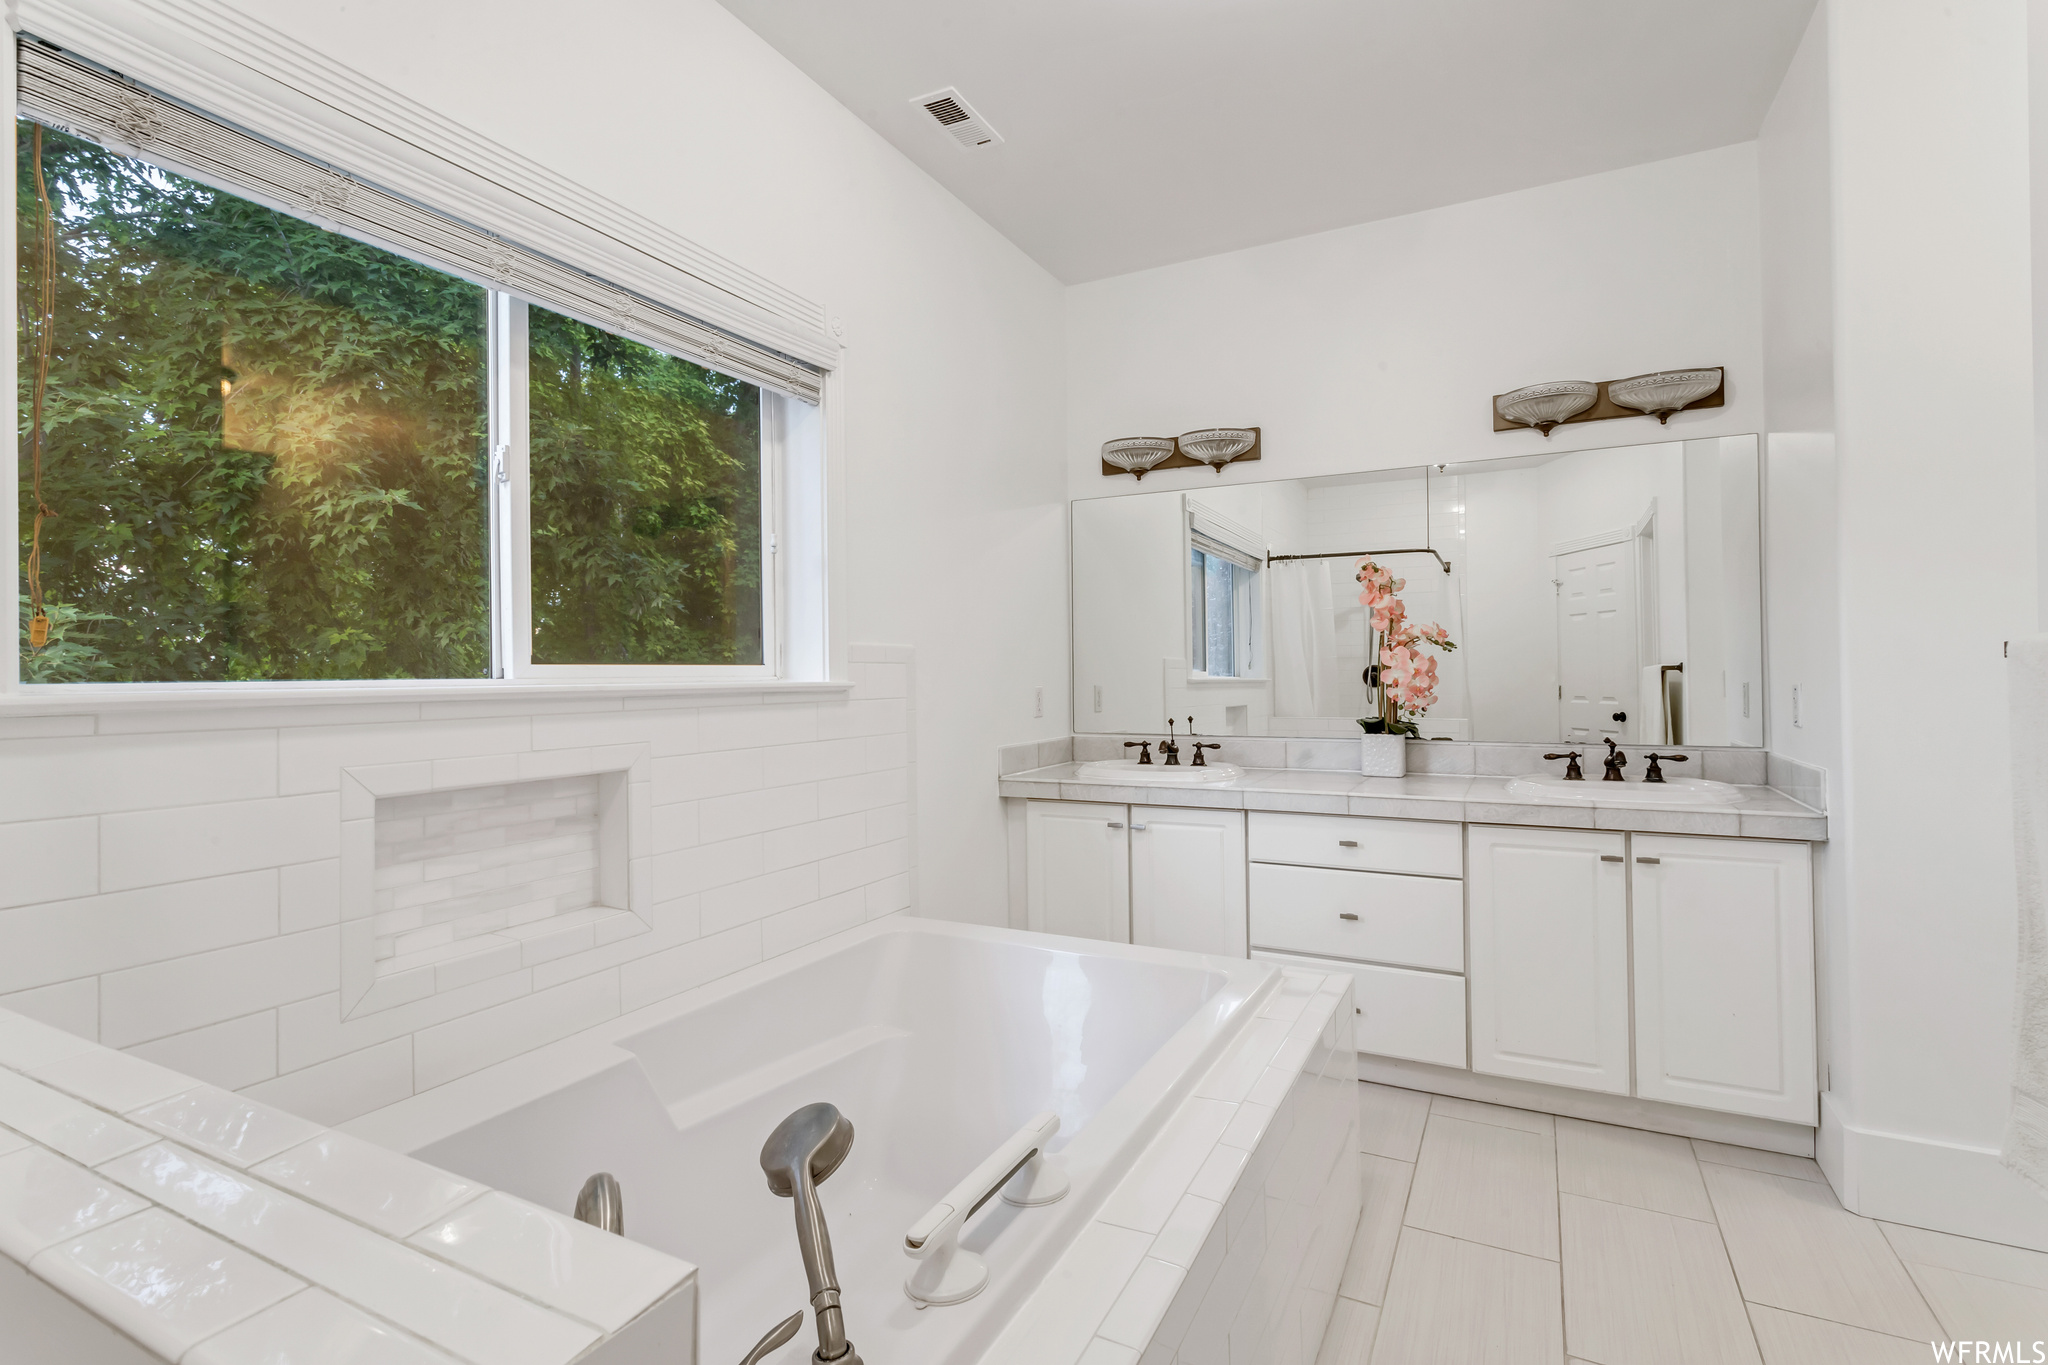 Bathroom with dual bowl vanity, tiled bath, light tile floors, plenty of natural light, and mirror